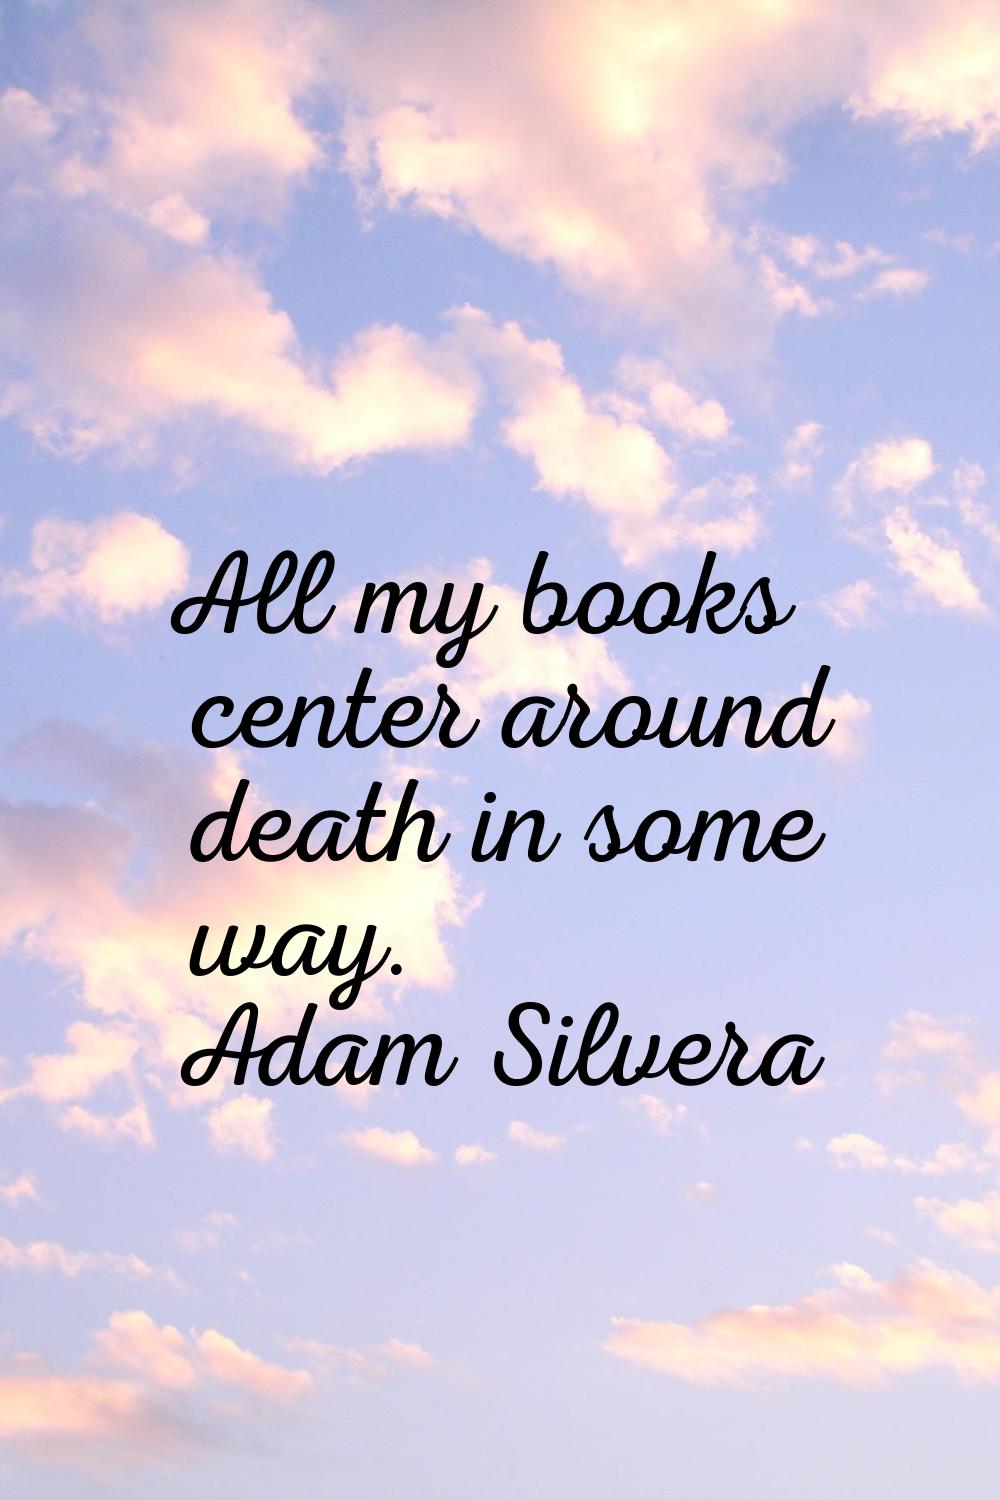 All my books center around death in some way.